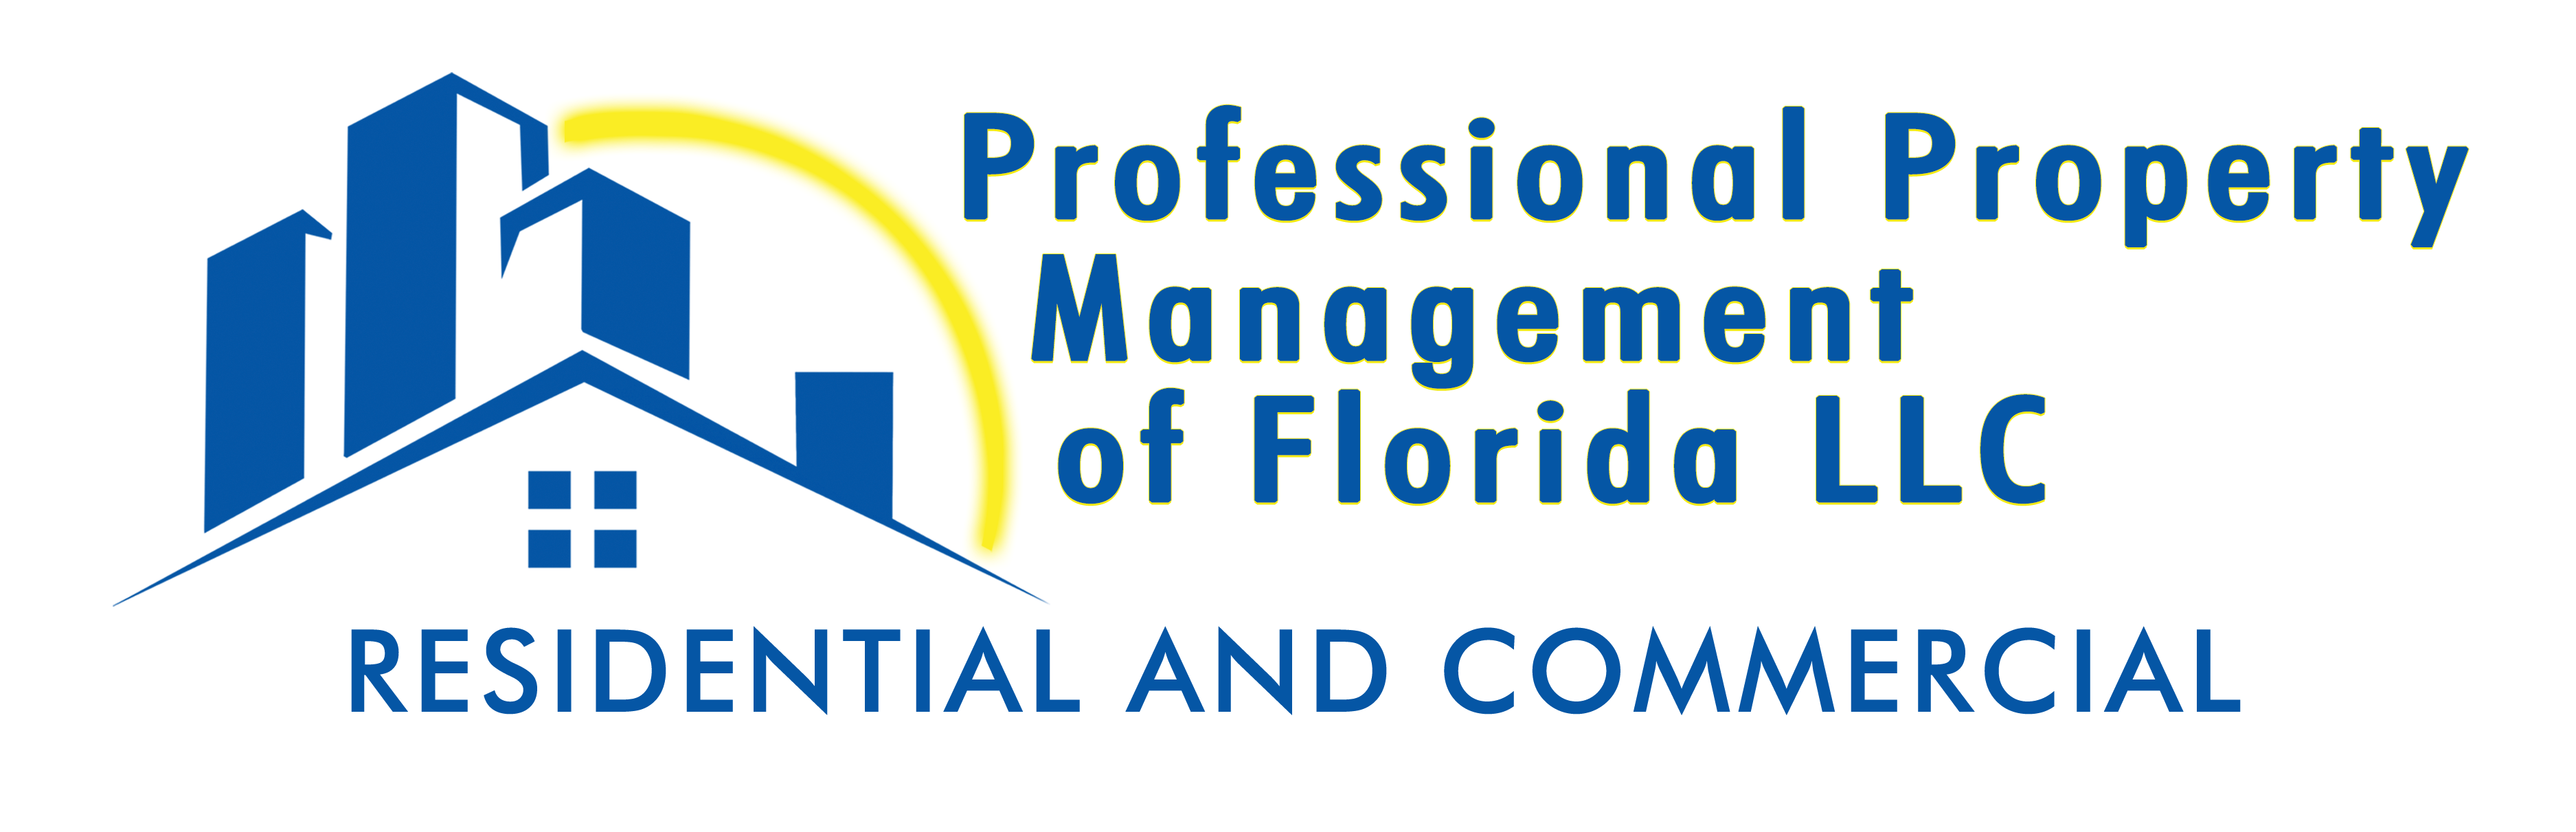 Professional Property Management of Florida, LLC logo